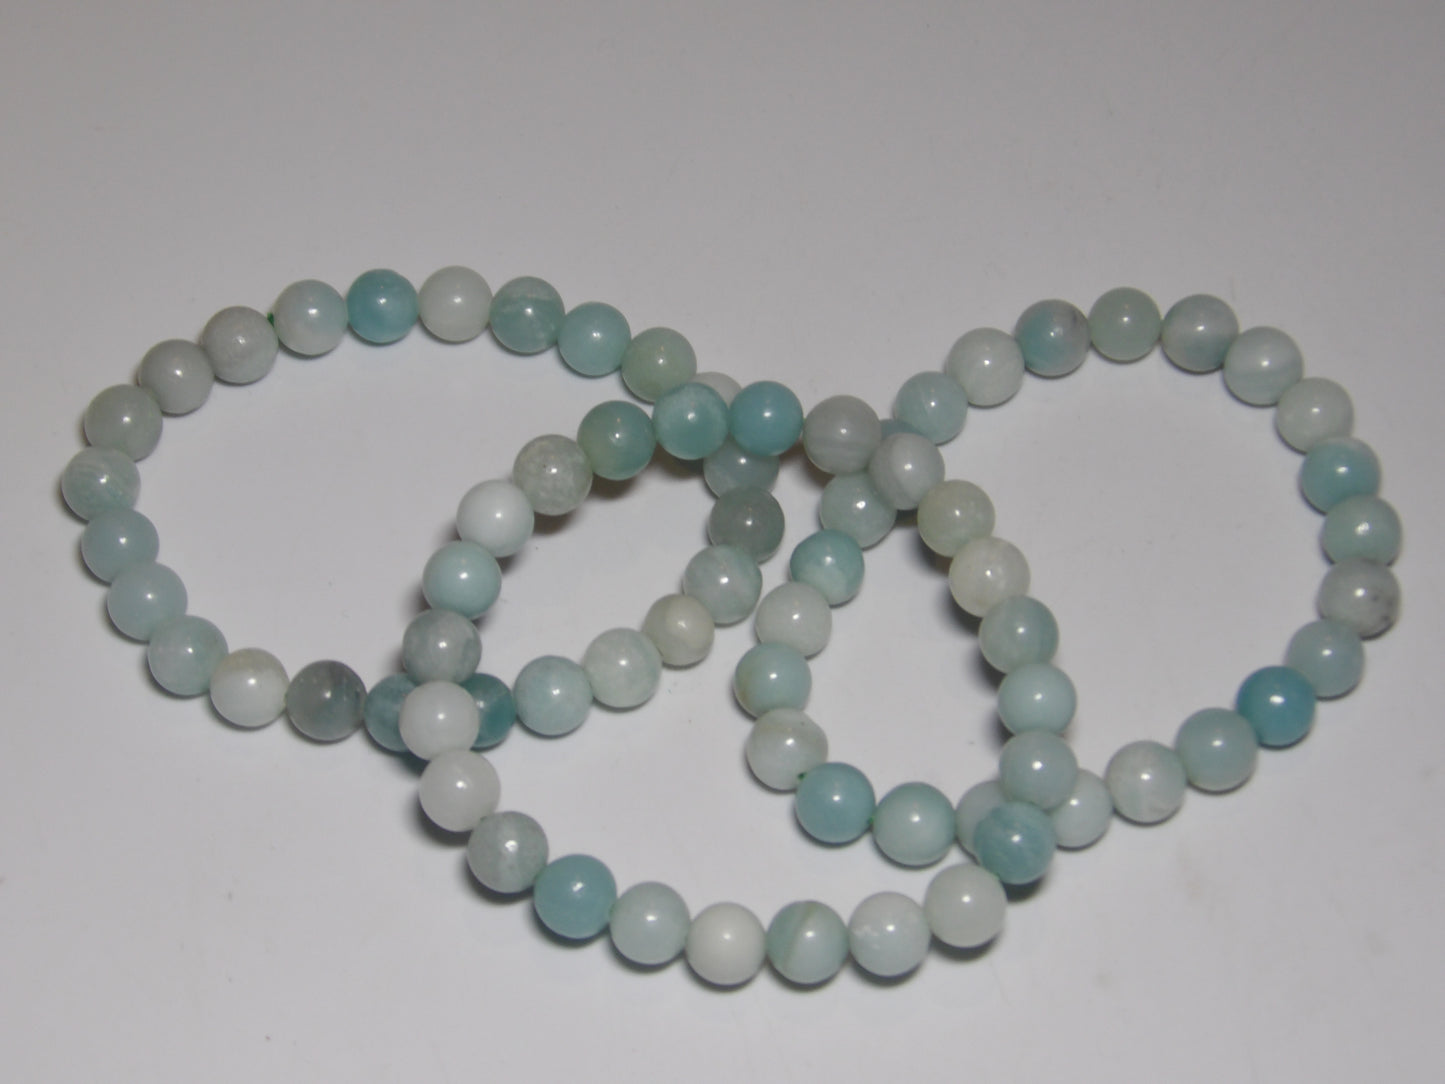 Blue Amazonite Bracelet (8 mm beads)